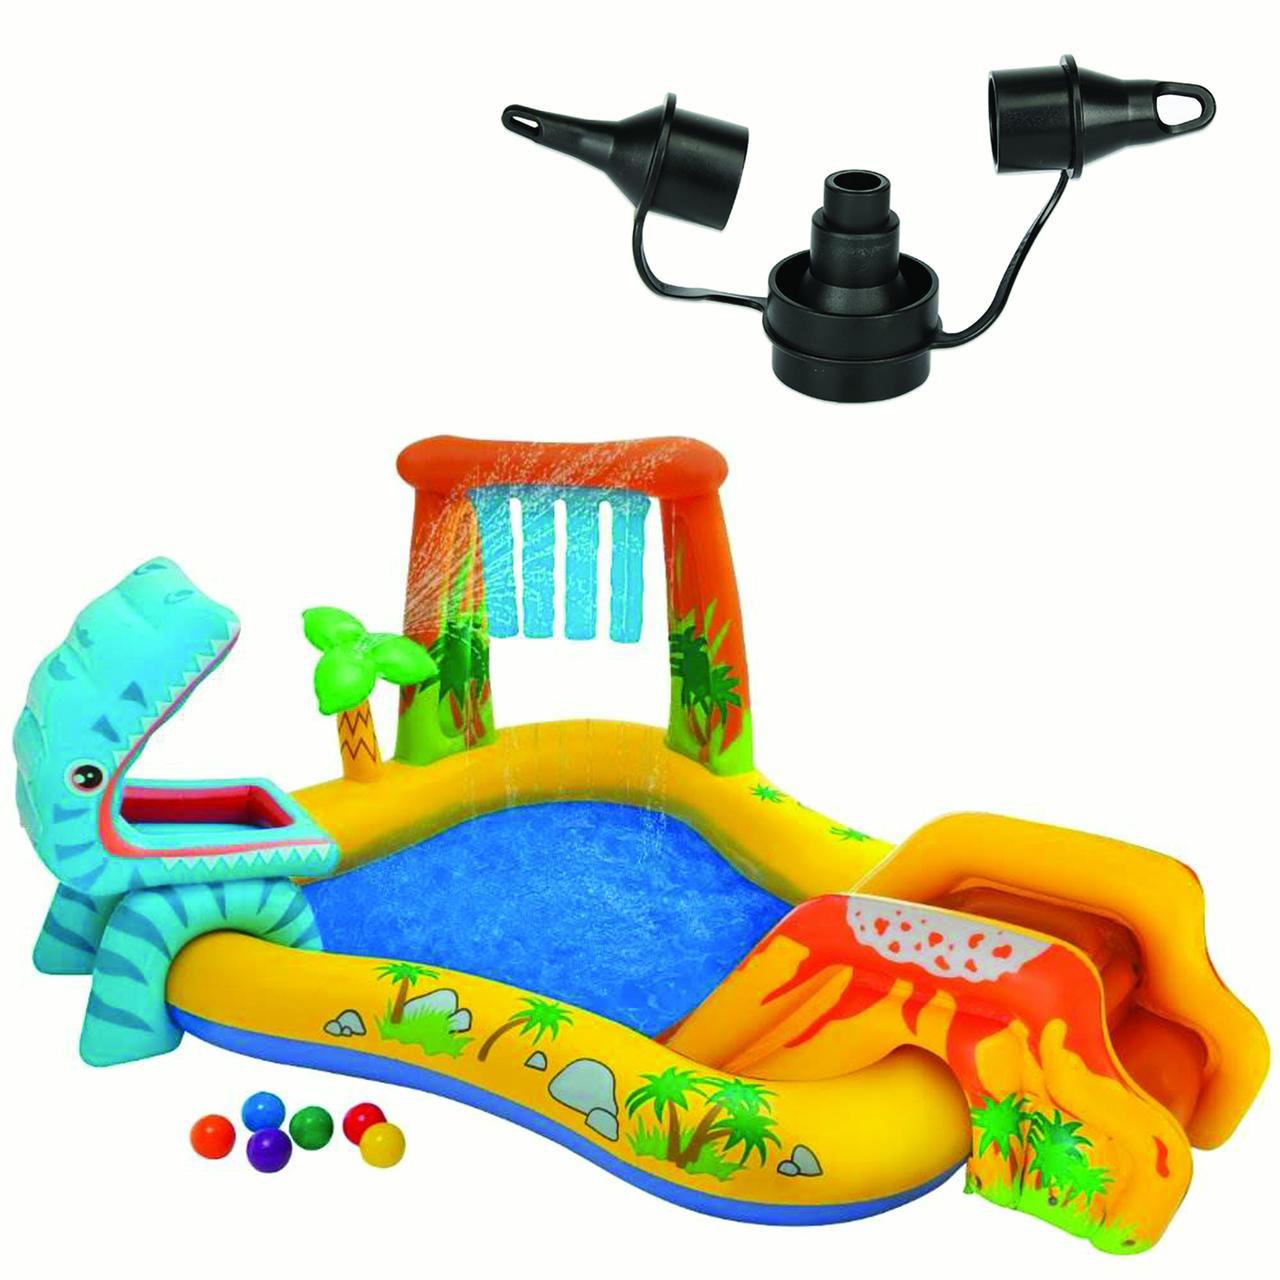 Intex 120V Electric Air Pump & Intex Inflatable Dinosaur Play Center Kids Pool - Walmart.com - Walmart.com玩水泳池